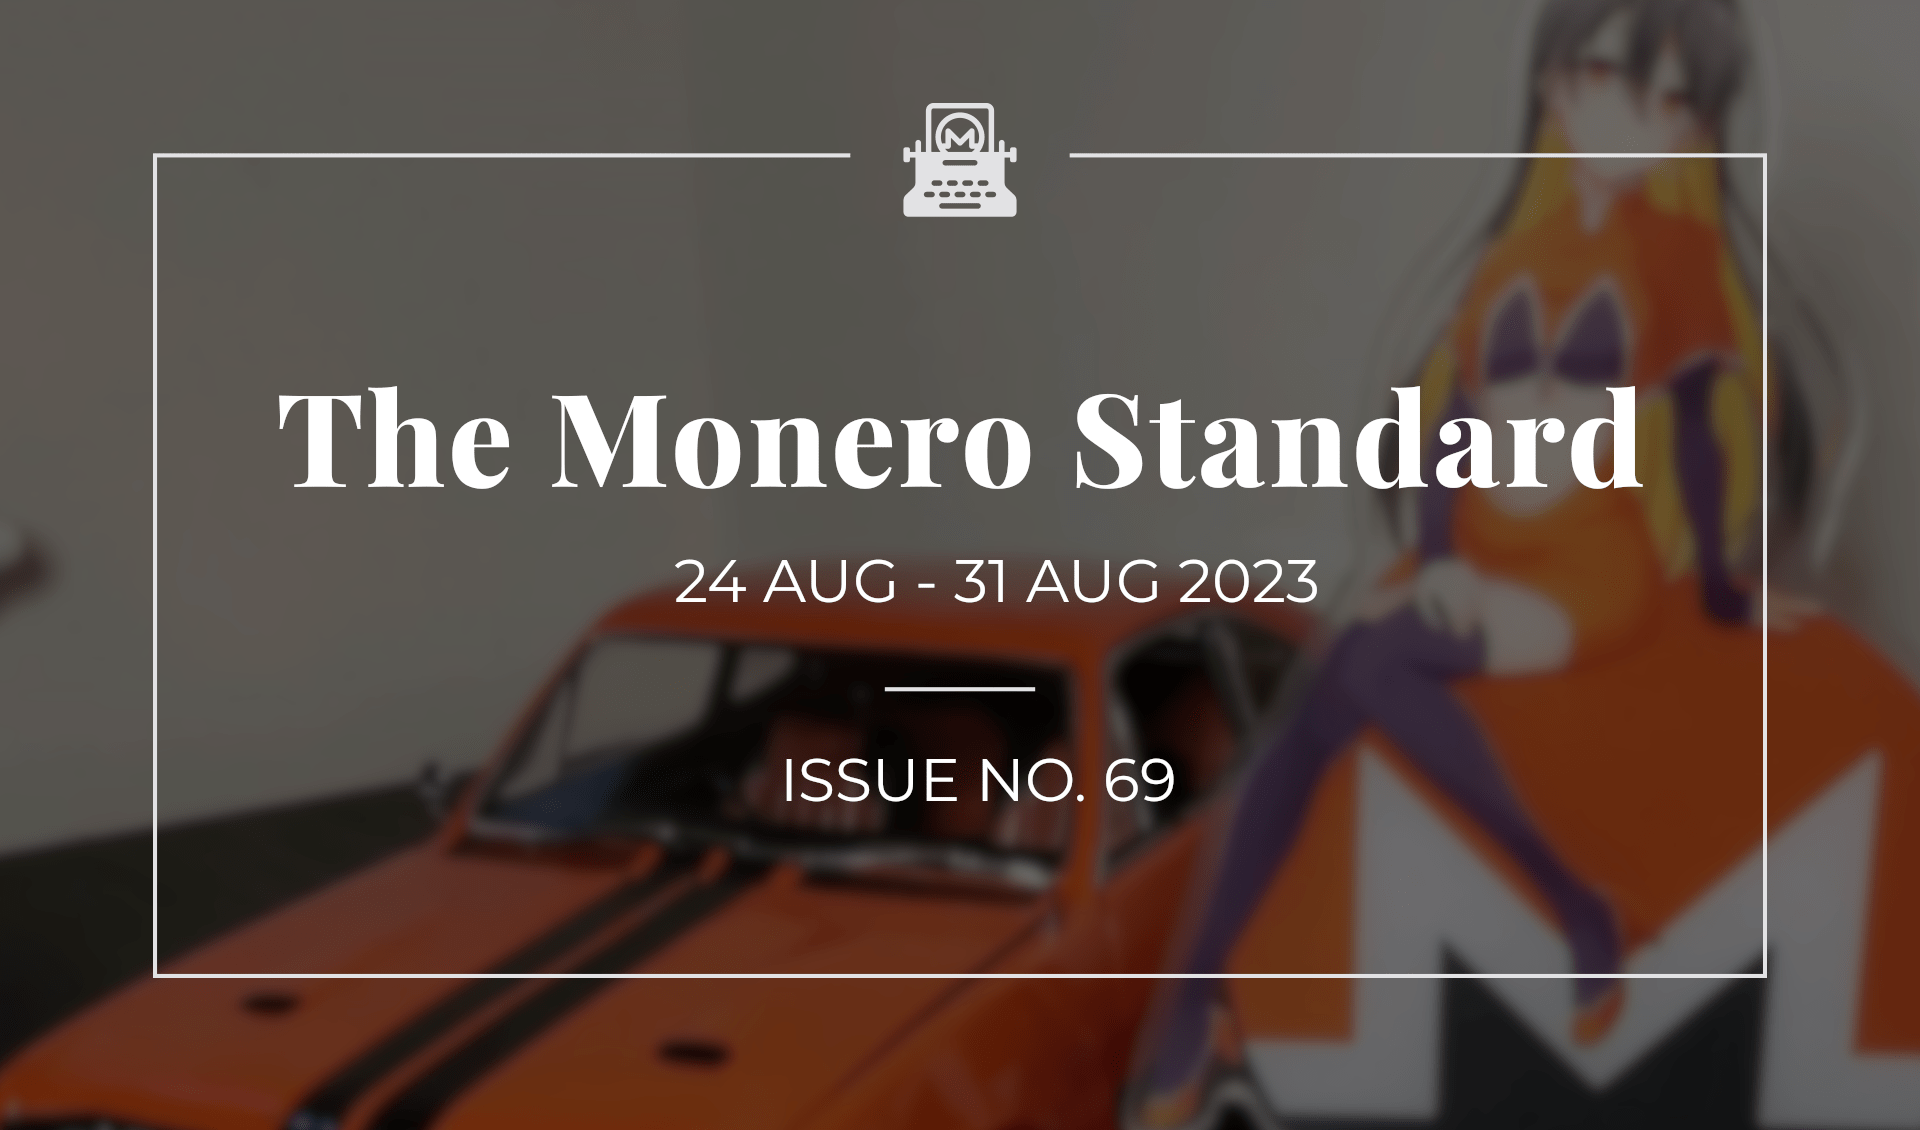 The Monero Standard #69: 24 Aug 2023 - 31 Aug 2023